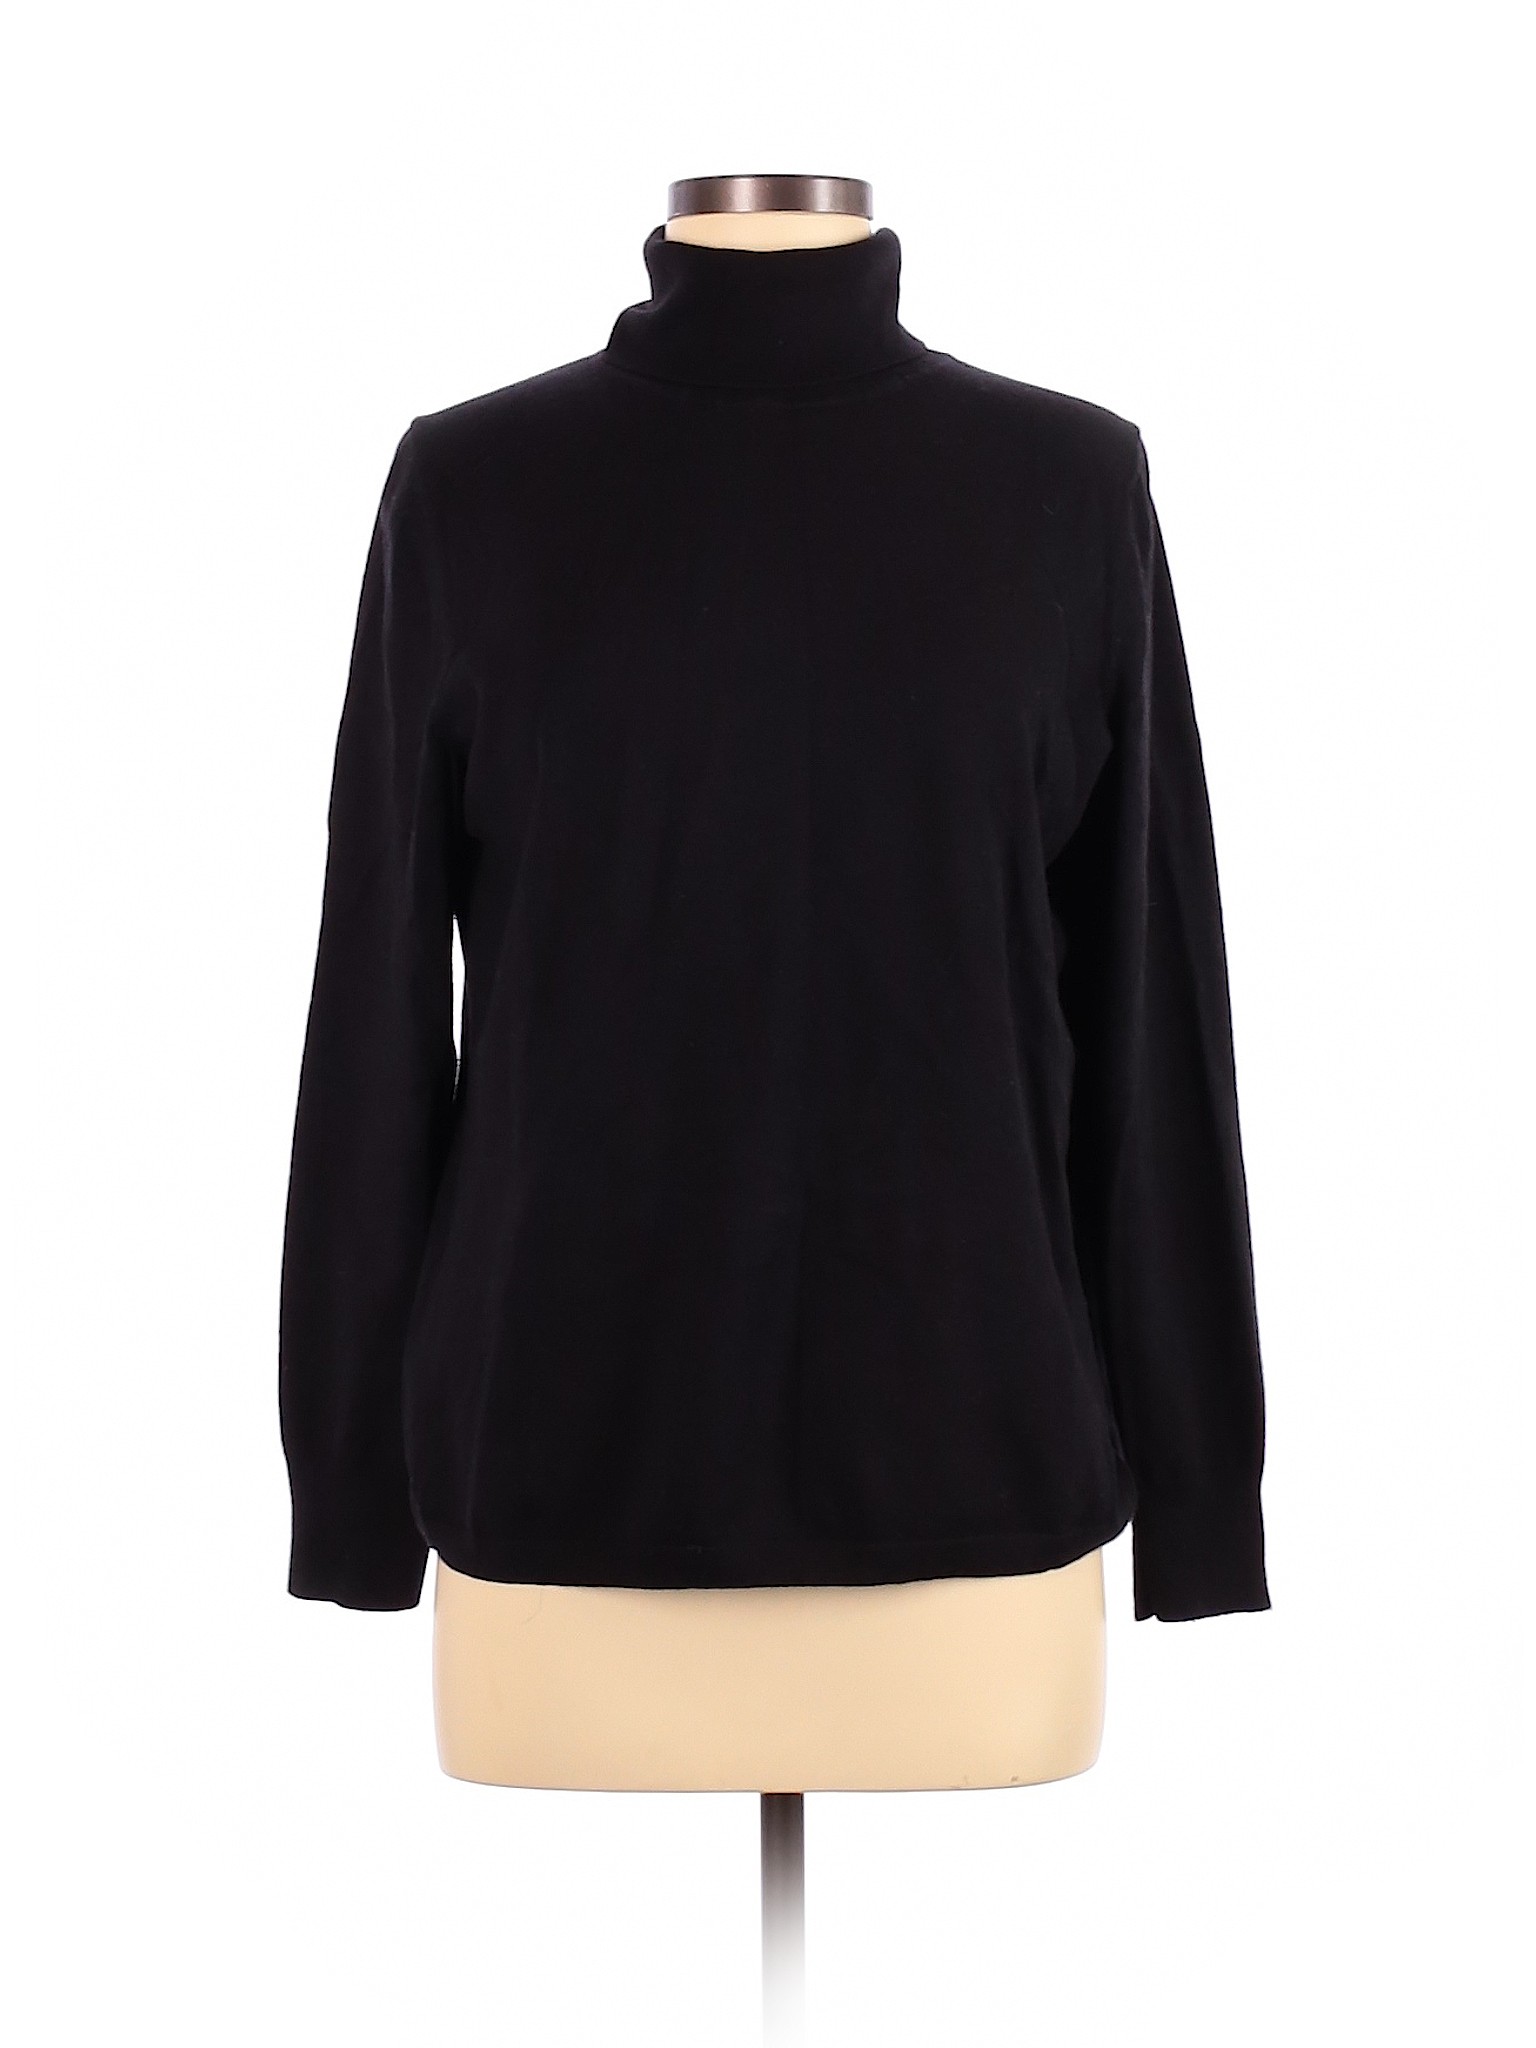 Talbots Women Black Turtleneck Sweater L | eBay